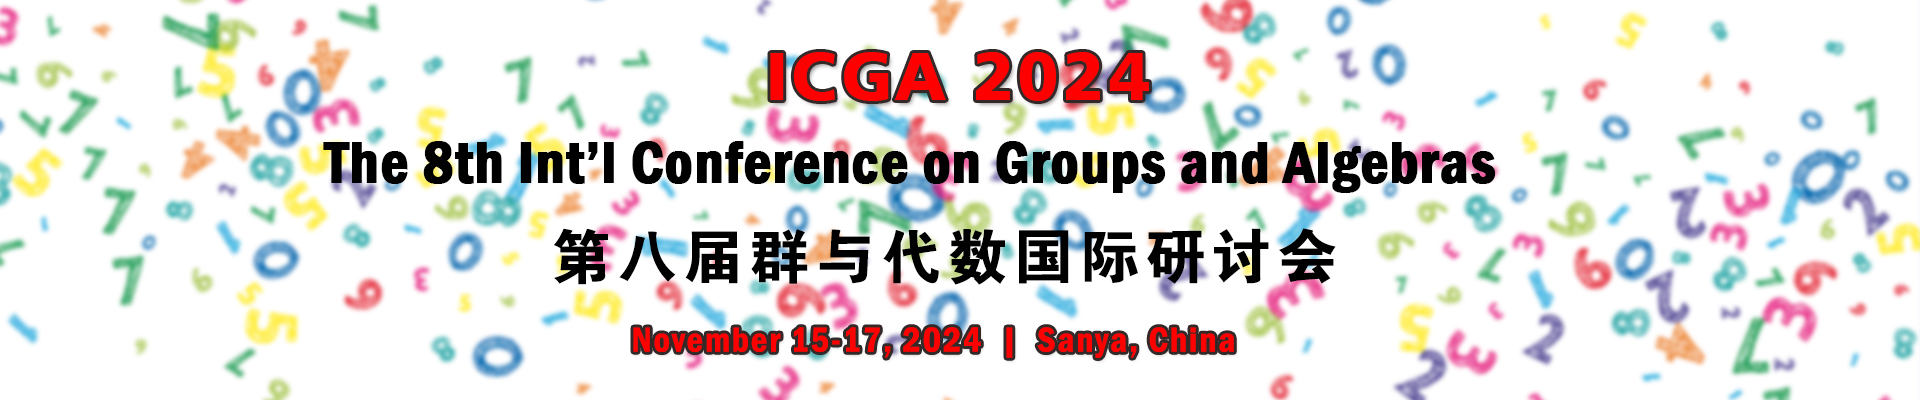 The 8th Int’l Conference on Groups and Algebras (ICGA 2024), Sanya, Hainan, China